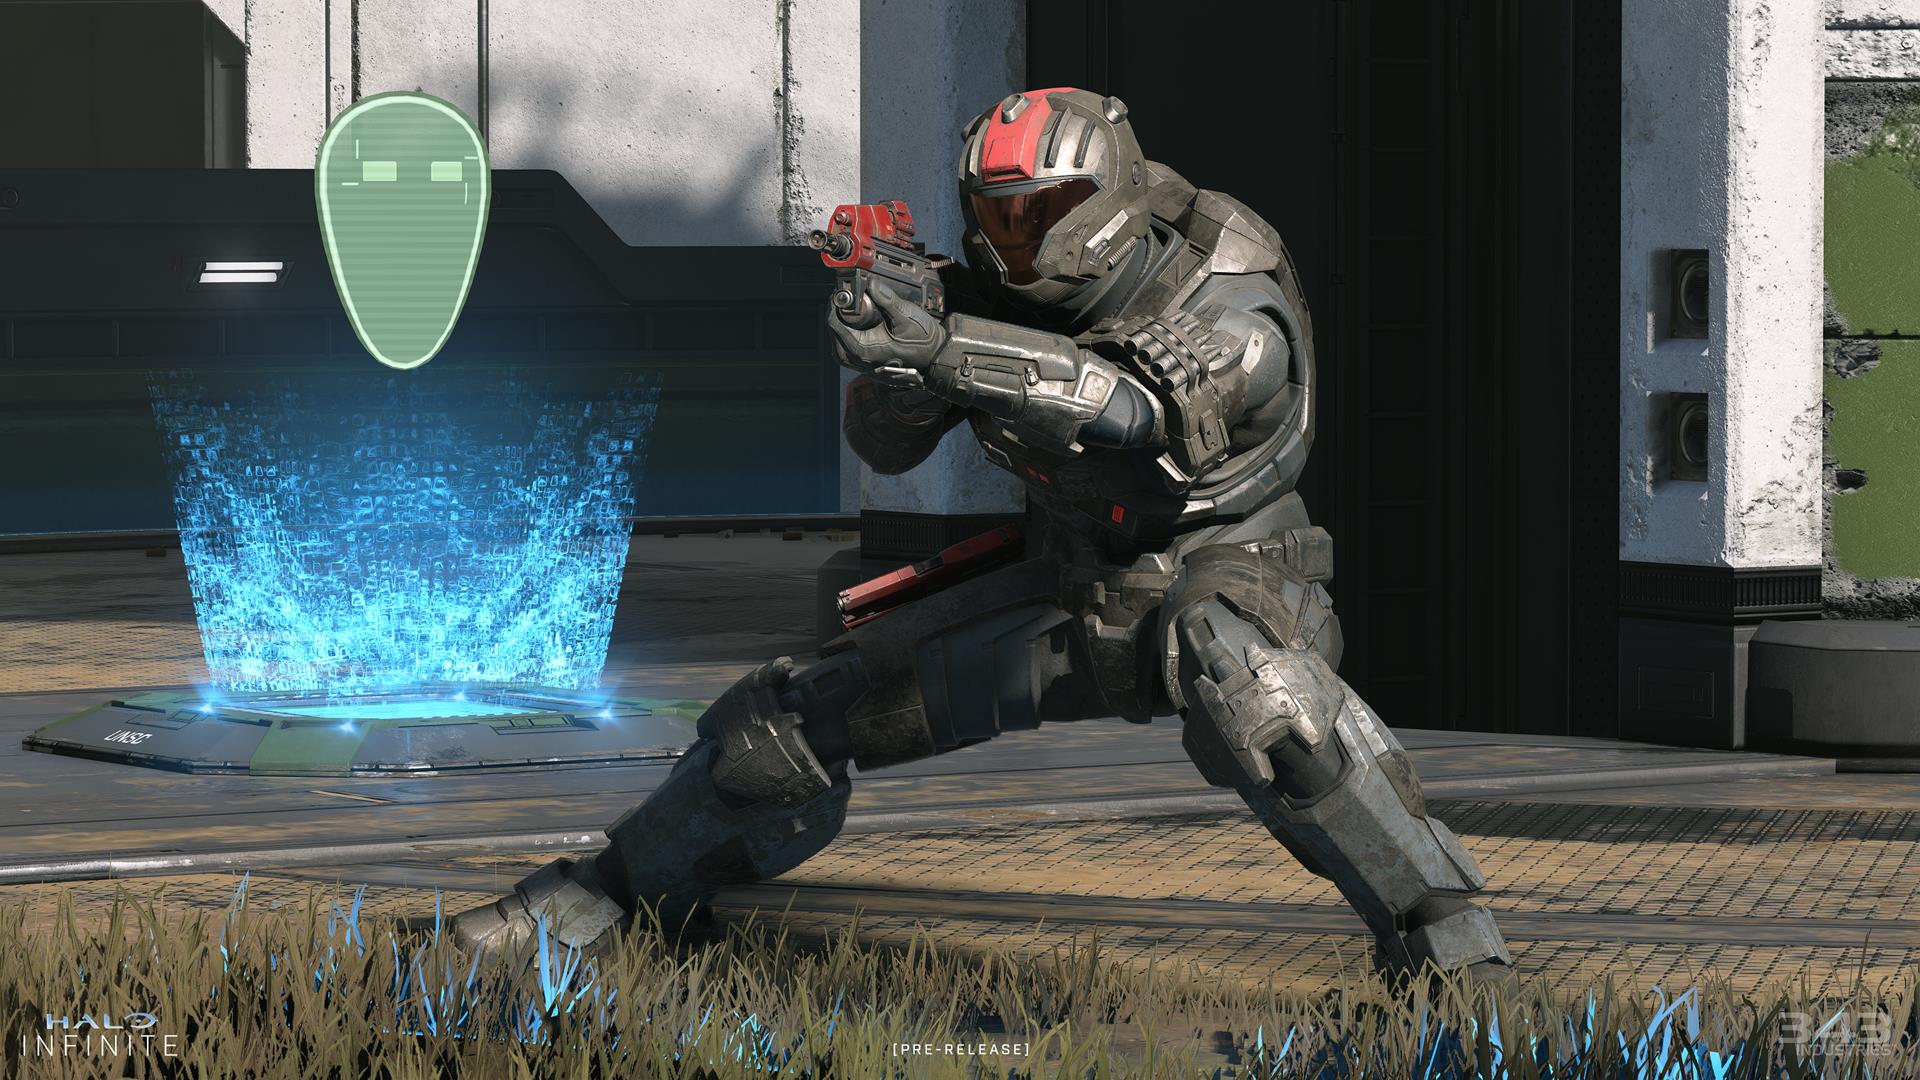 Halo Infinite Spartan in a combat pose as she prepares to fire a gun